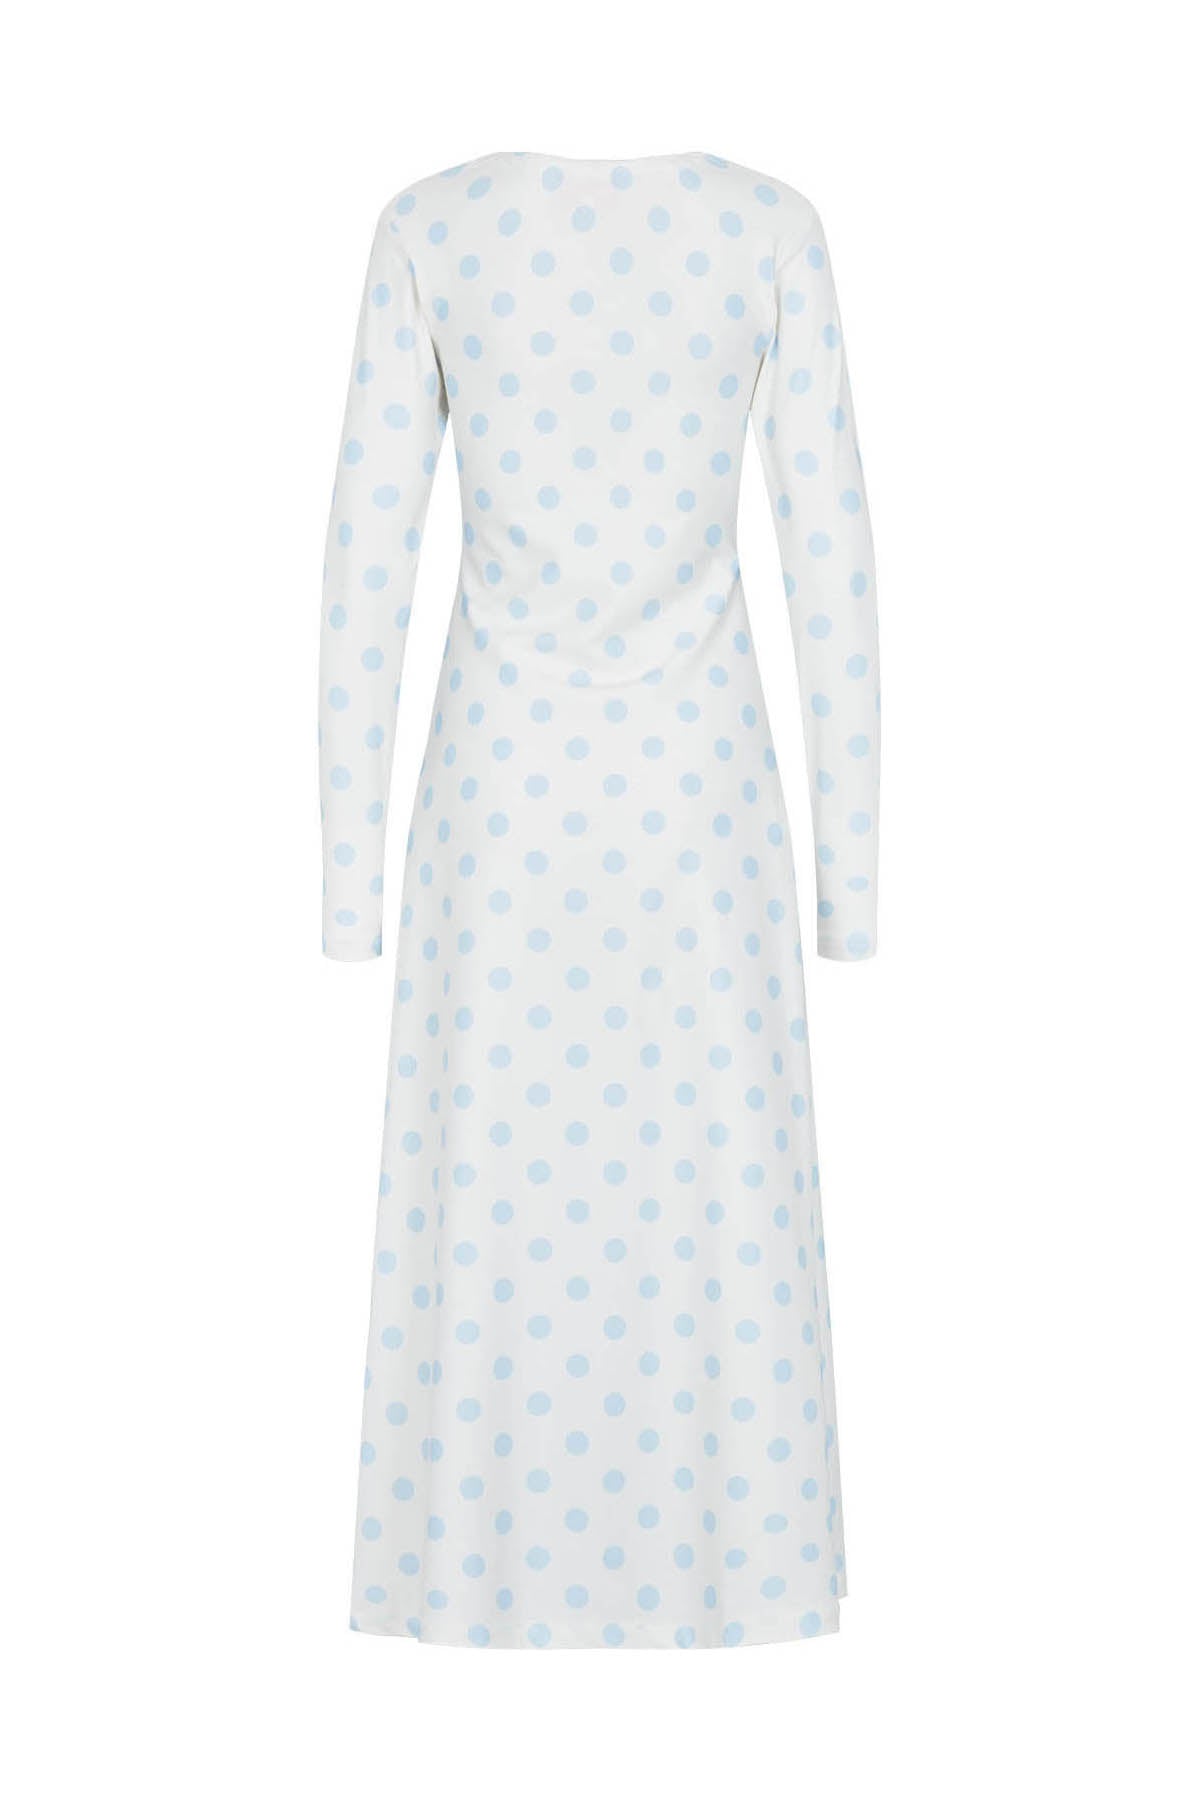 Sassy Dress - White & Blue S